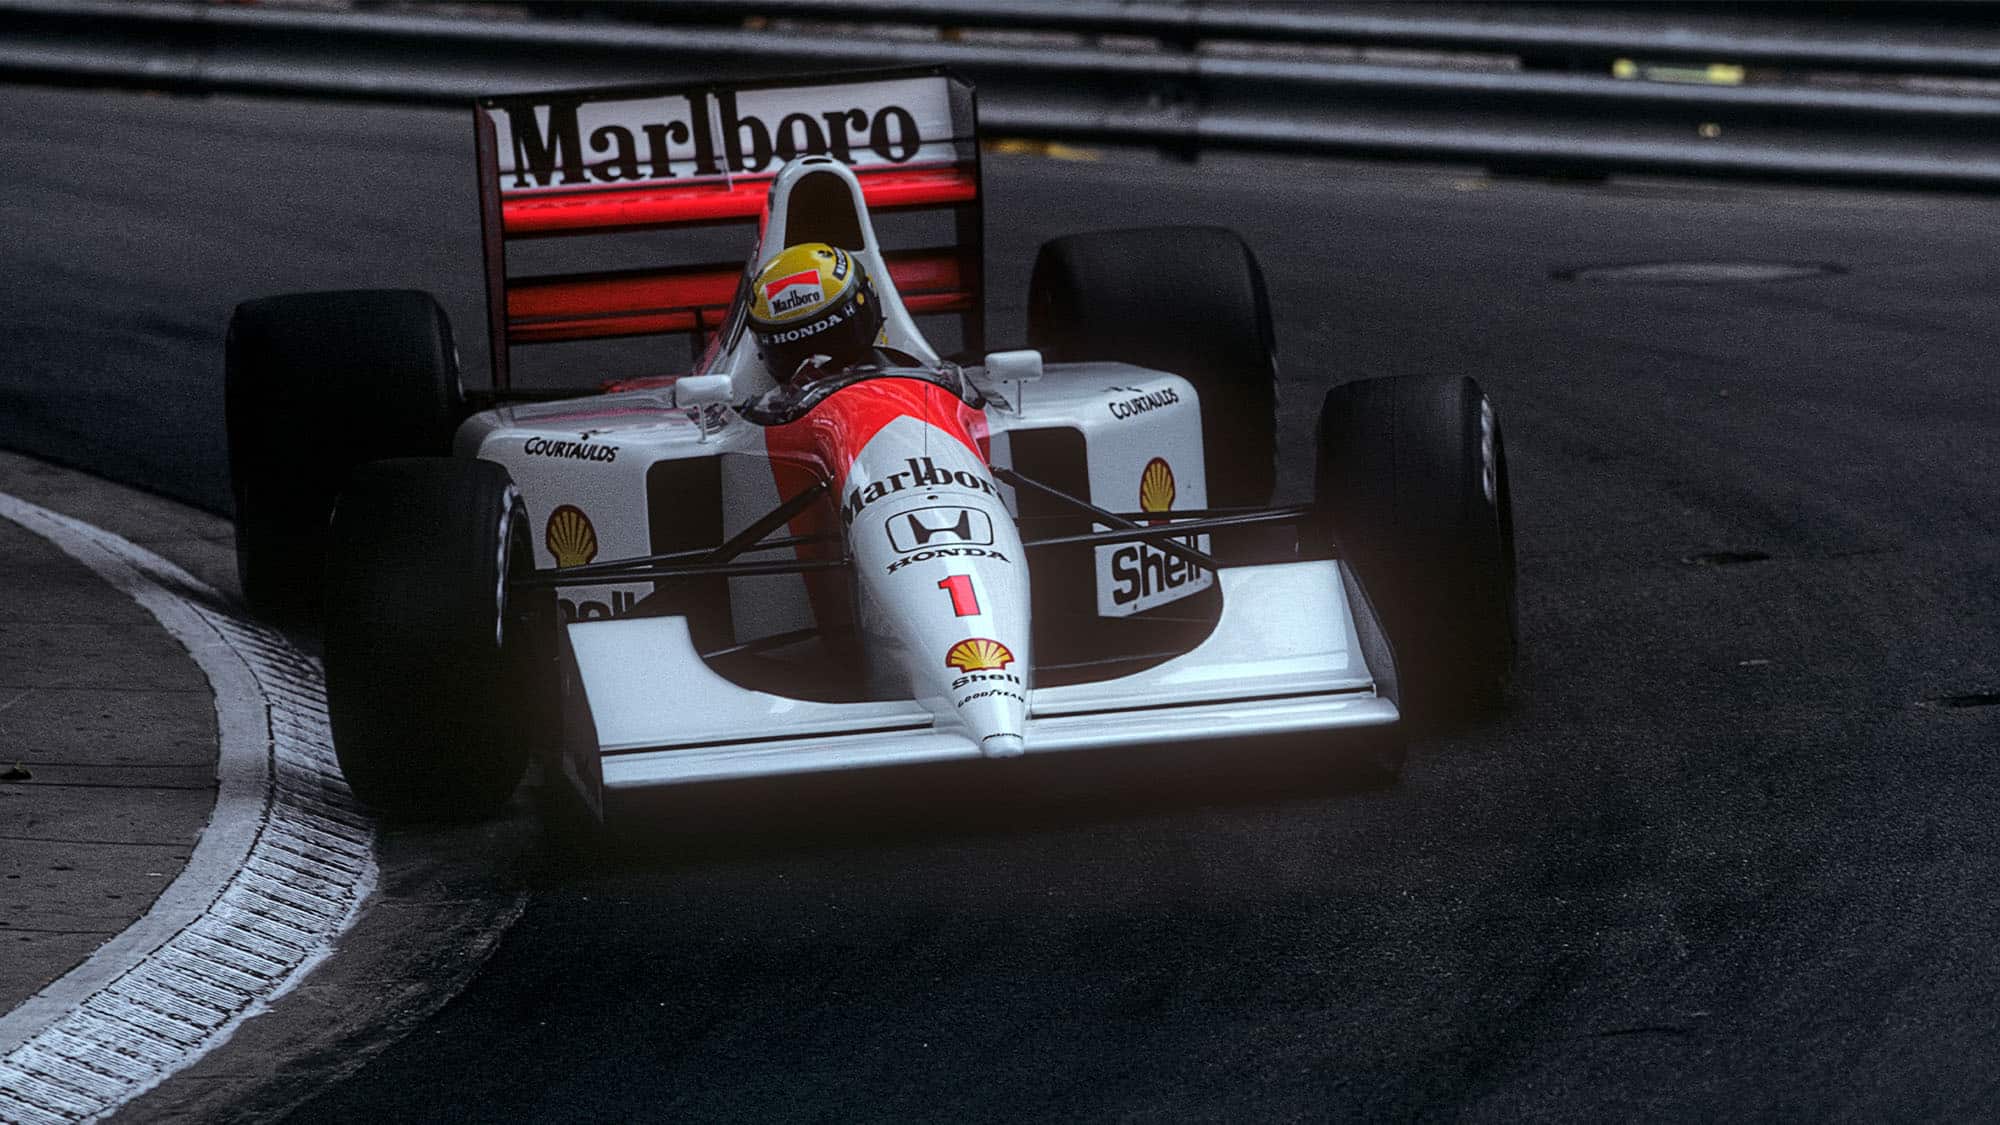 Ayrton Senna, McLaren-Honda MP4/7A, Grand Prix of Monaco, Monaco, 31 May 1992. (Photo by Paul-Henri Cahier/Getty Images)